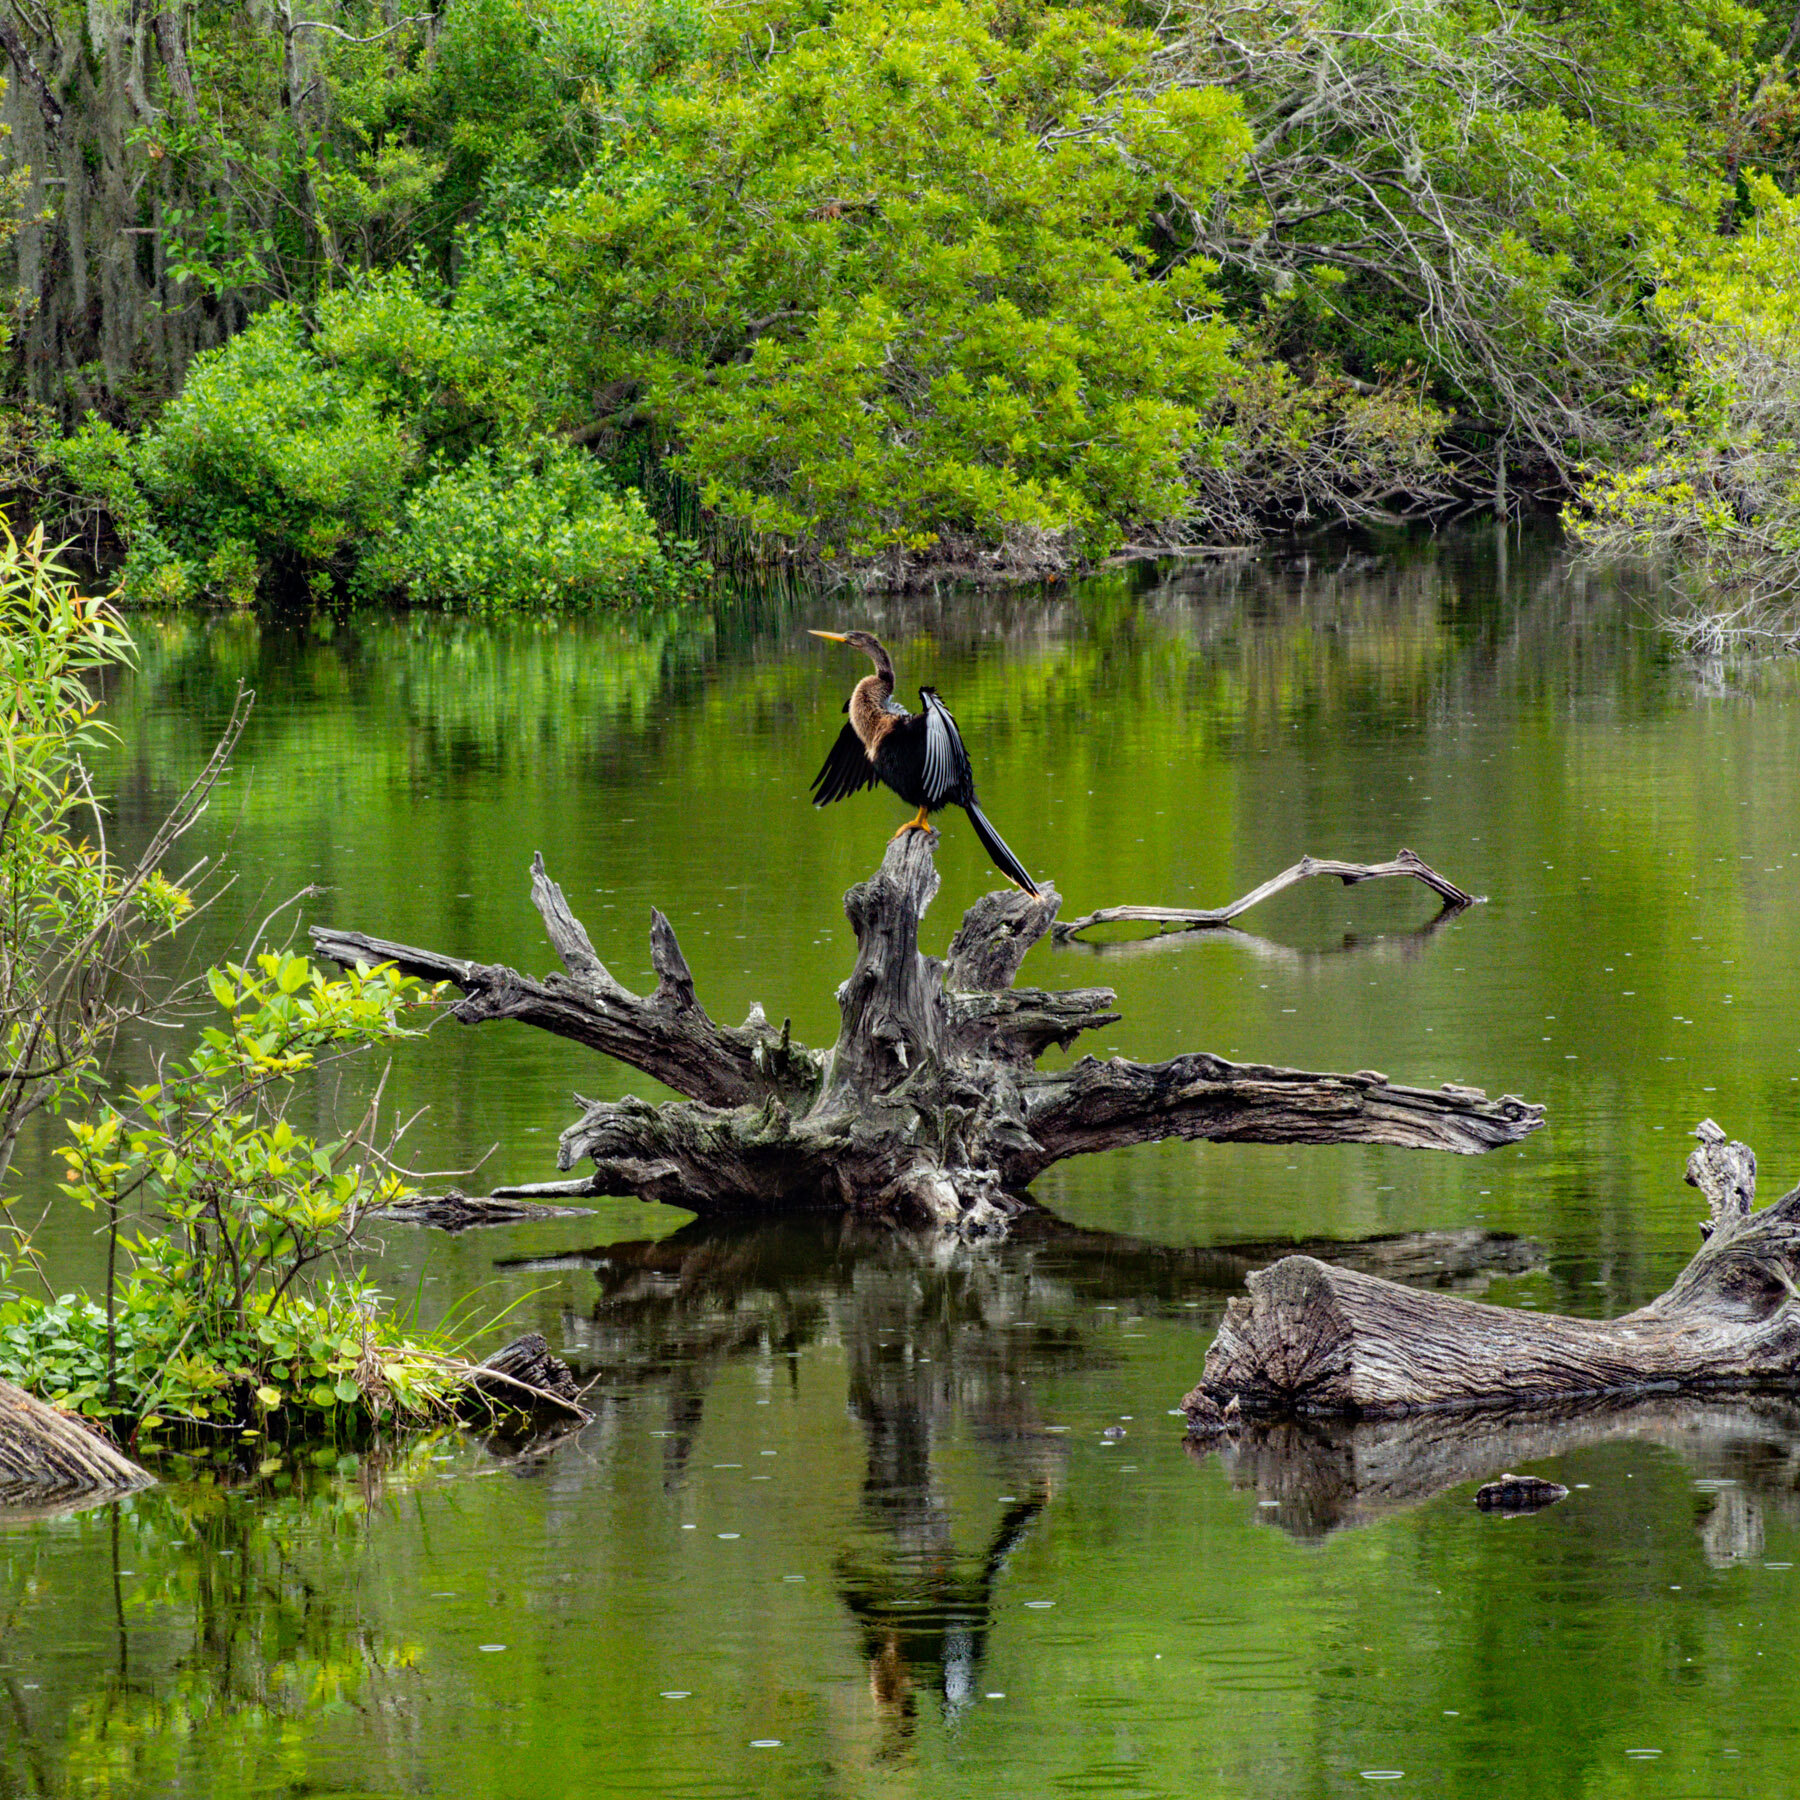 04-08-21 Spring Break 119 Harris Neck preserve Woody Pond cormorant IG Square.jpeg